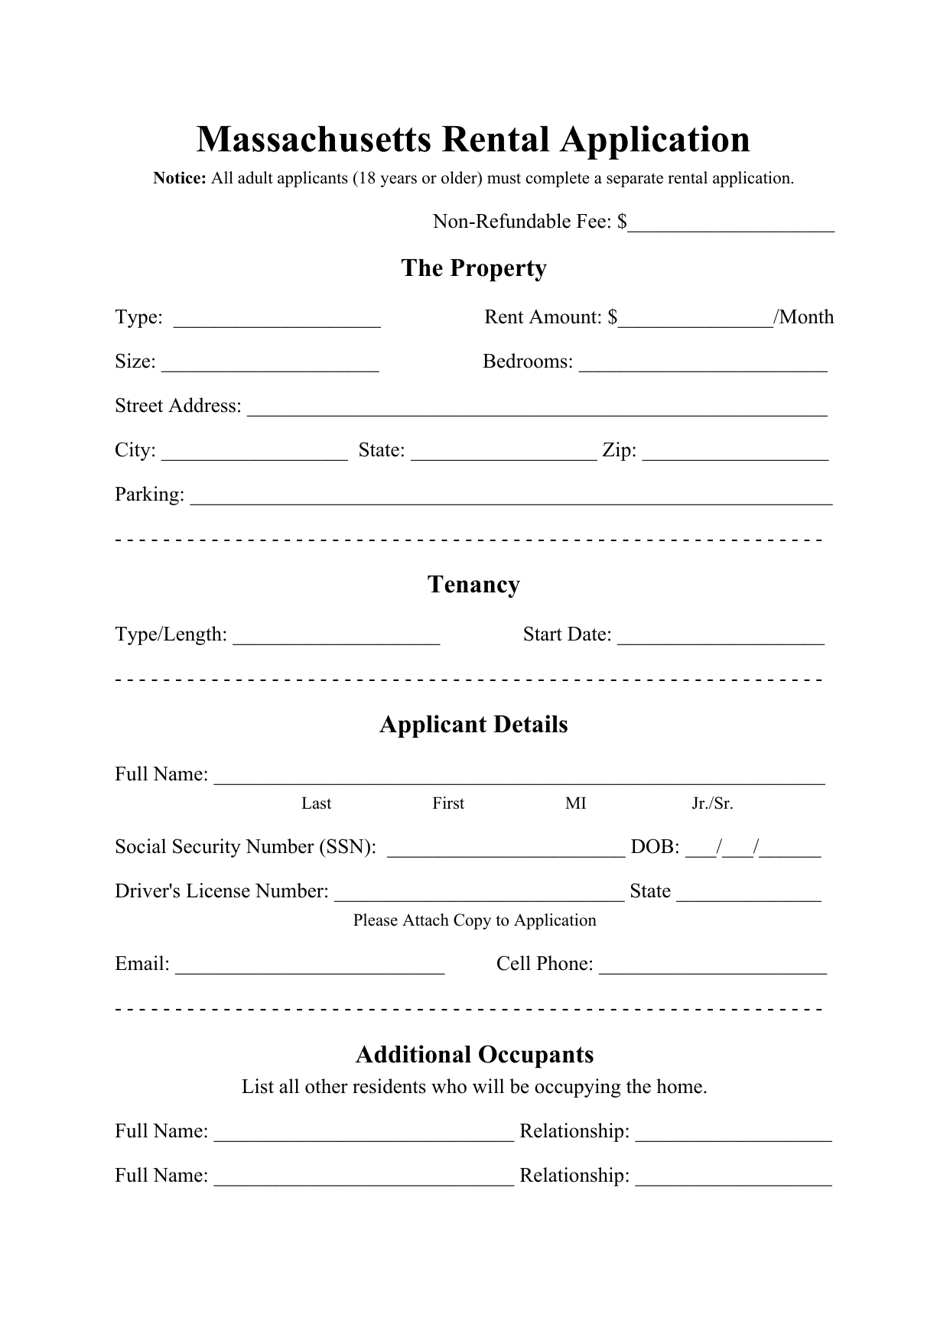 Rental Application Form - Massachusetts, Page 1